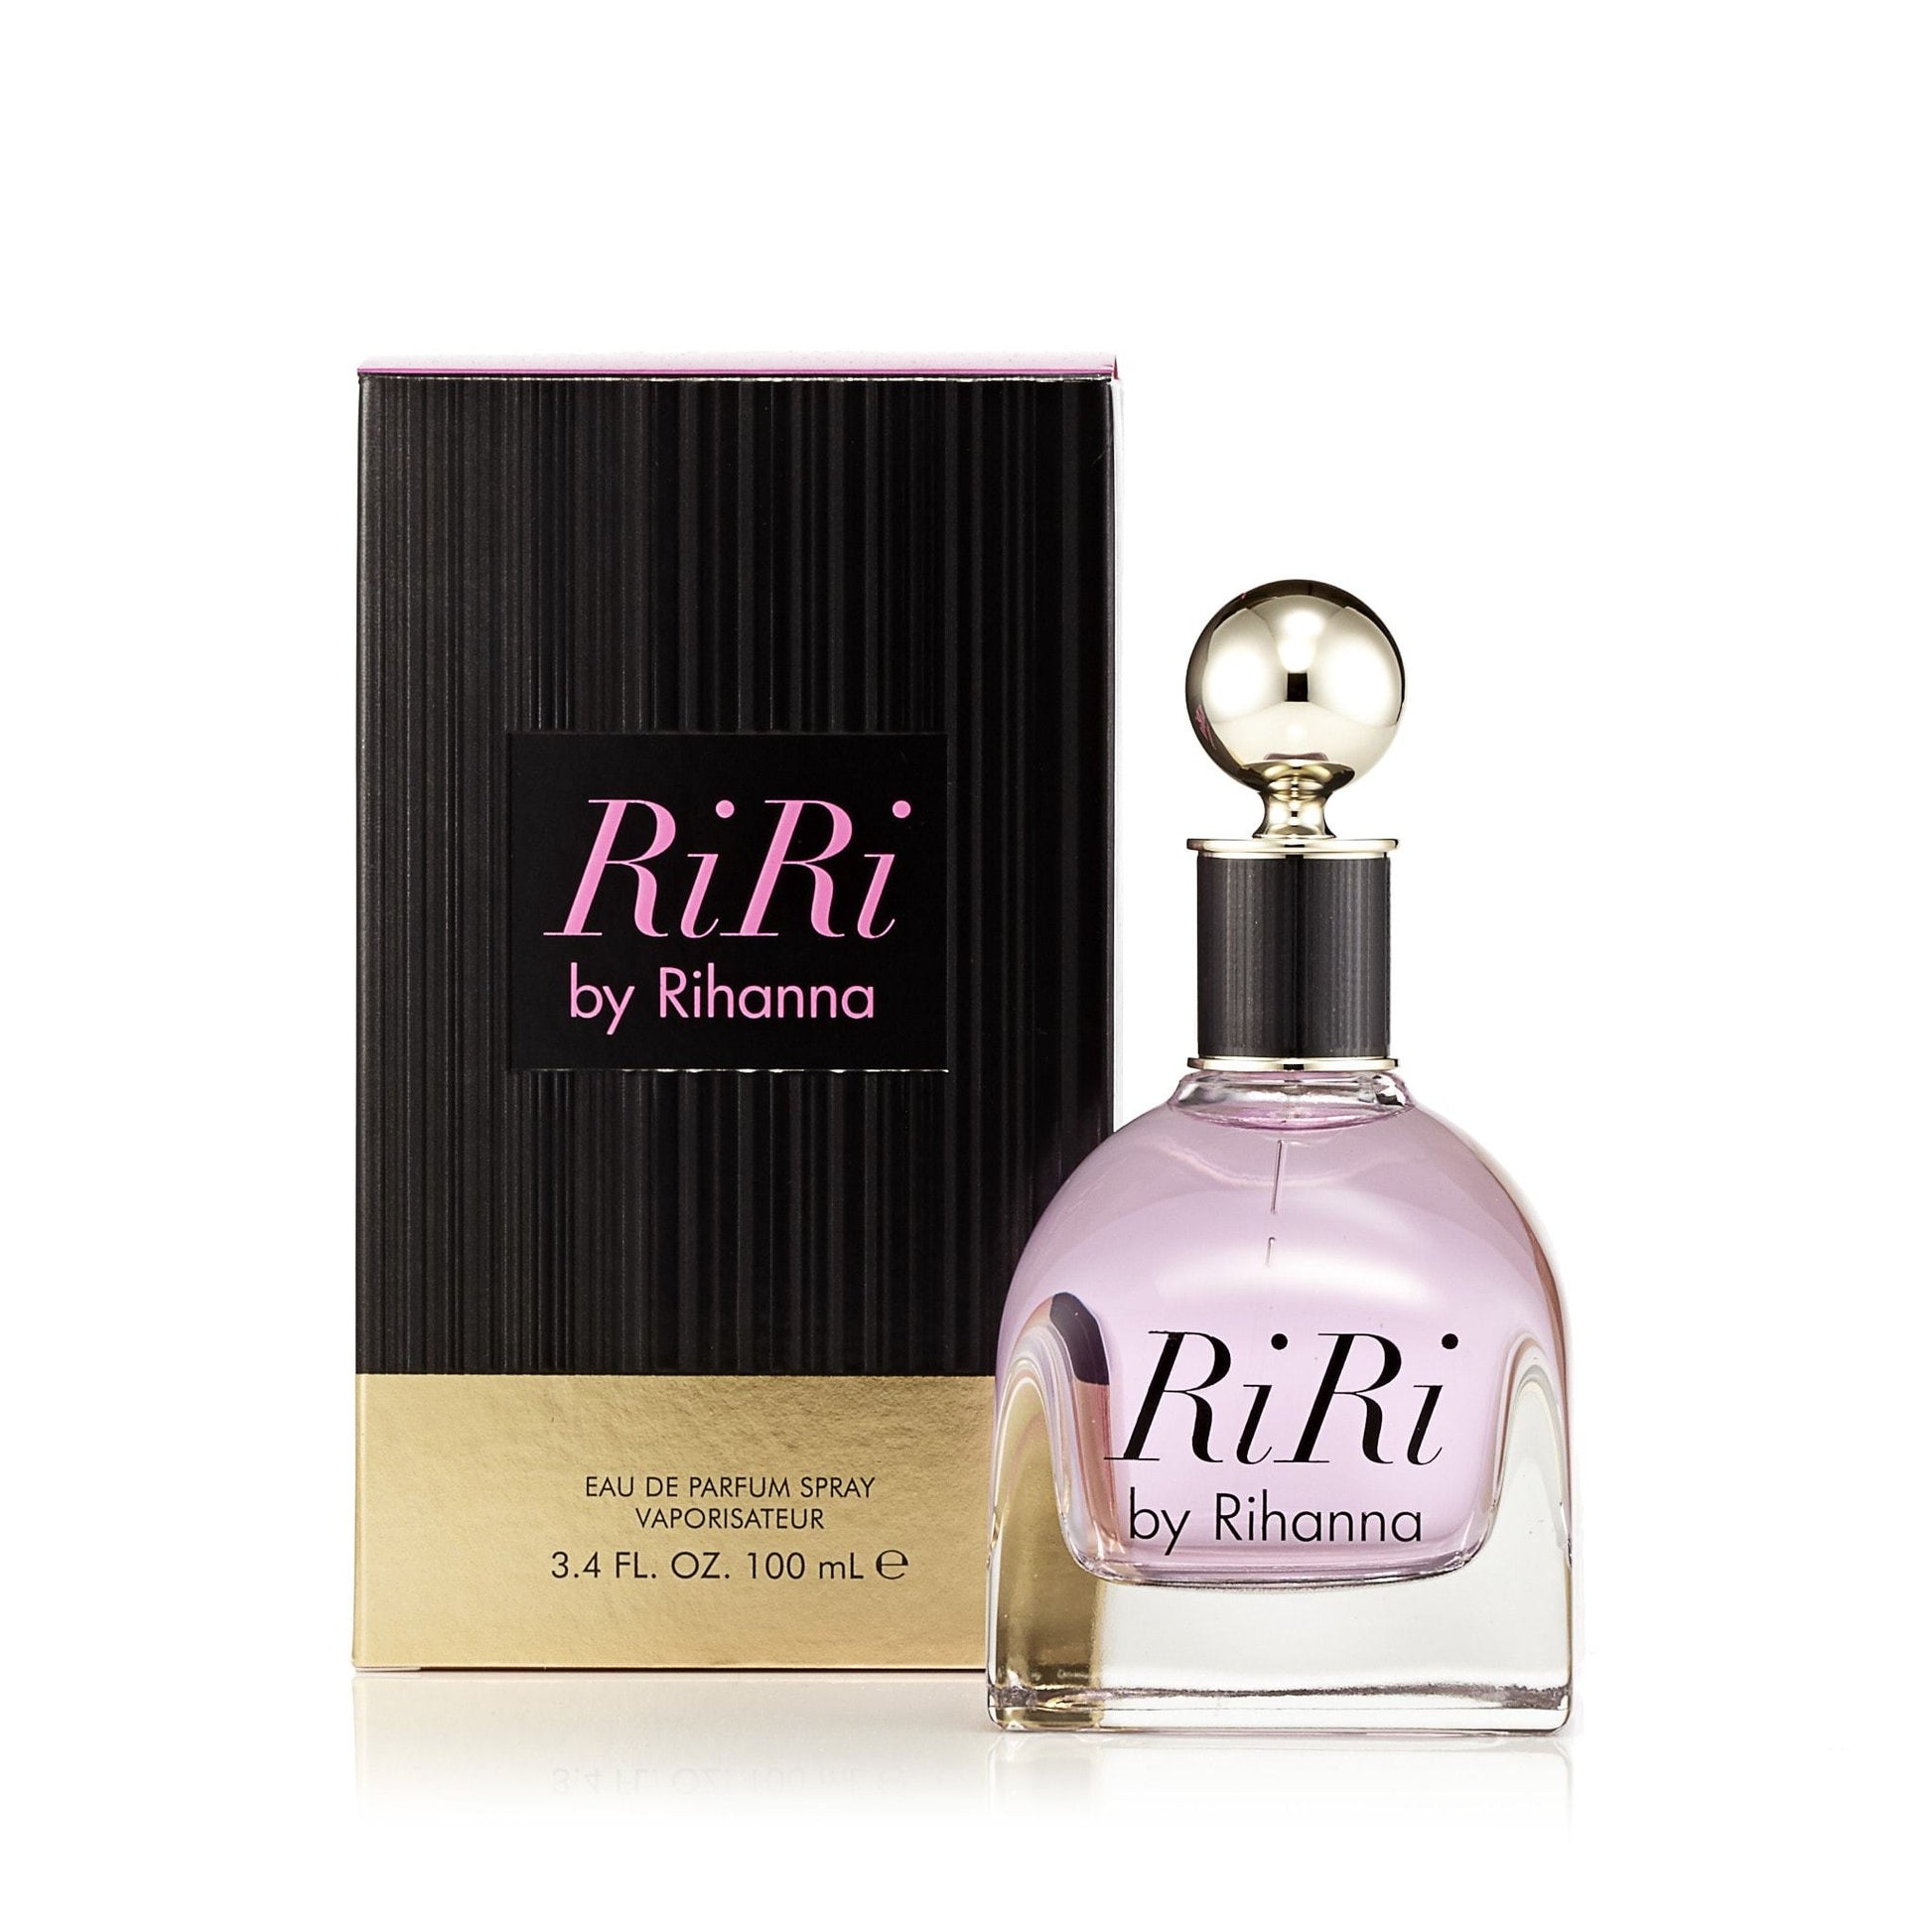 Ri Ri Eau de Parfum Spray for Women by Rihanna, Product image 1